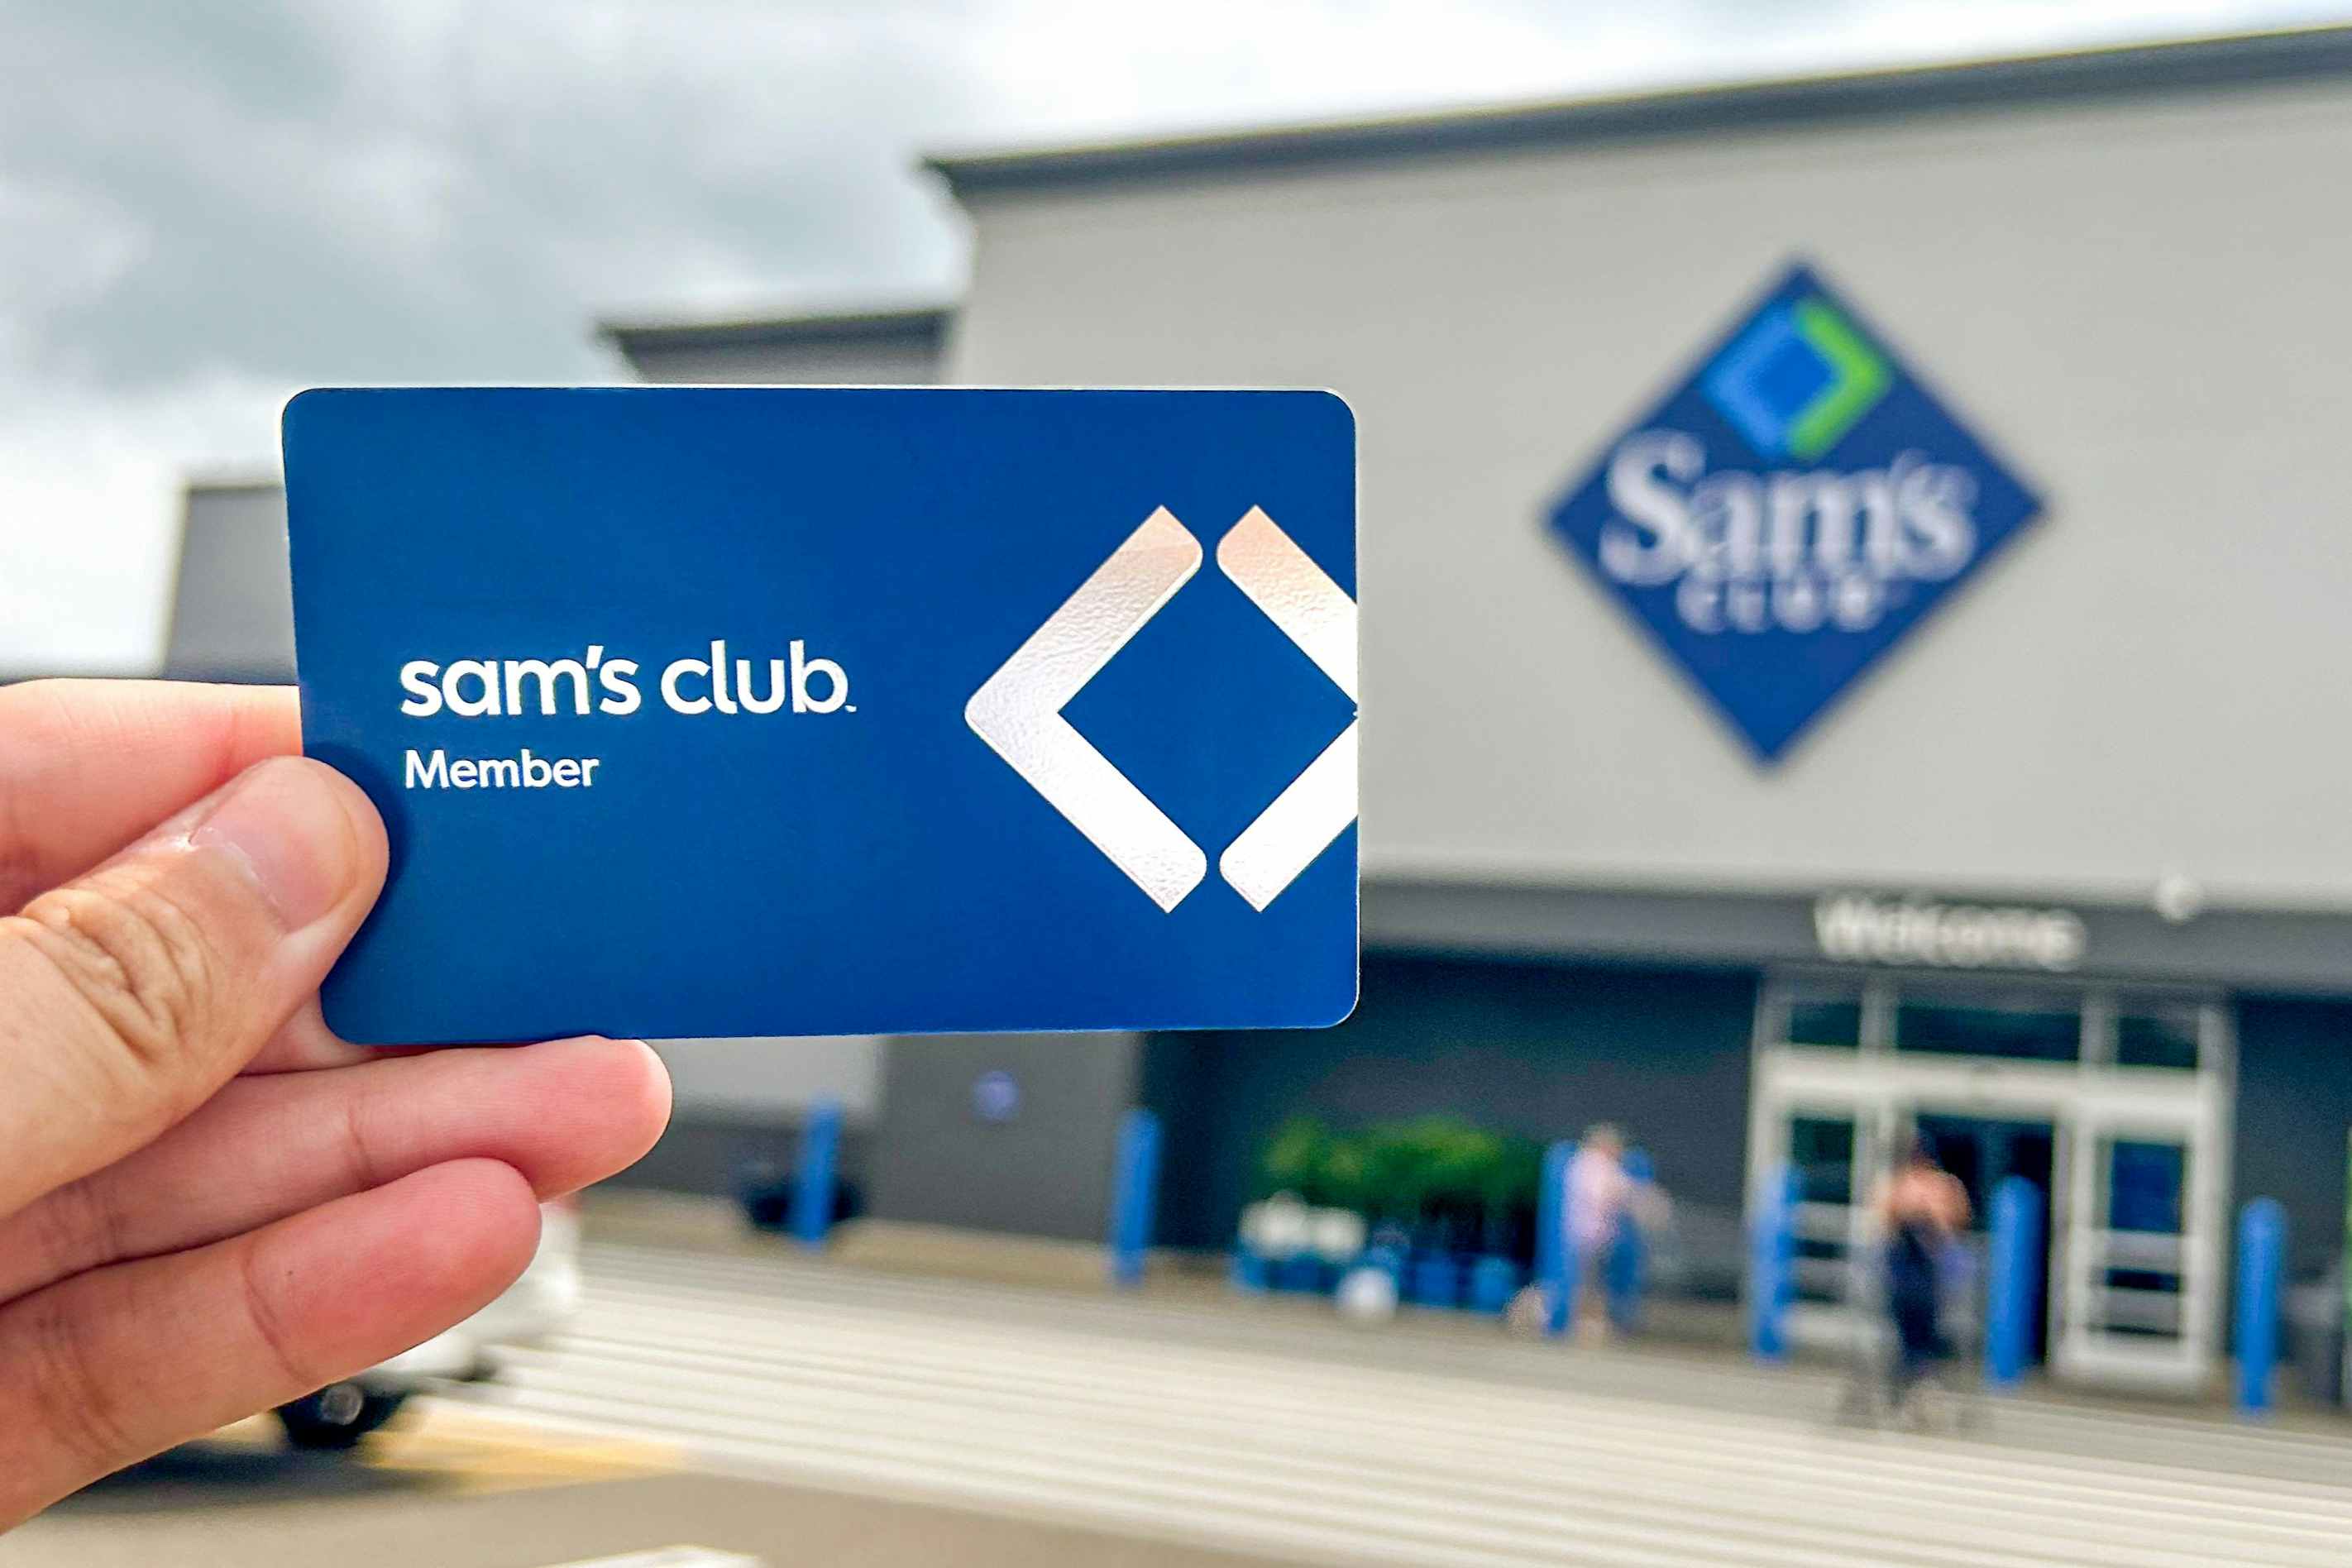 sams-club-member-card-store-sign-kcl